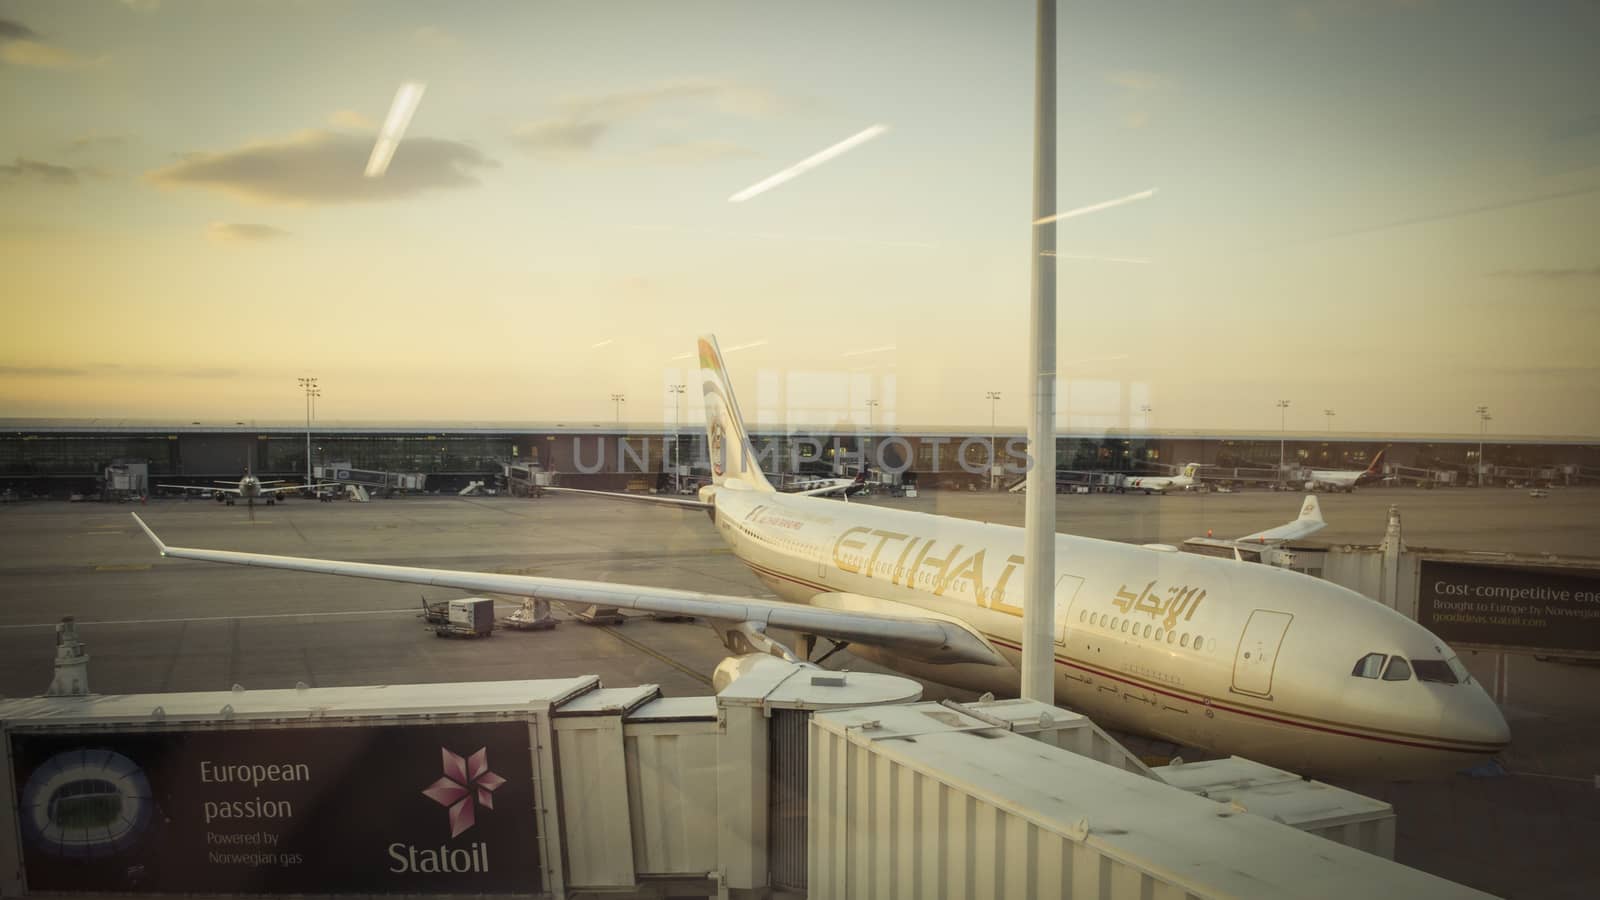 Zaventem, Belgium, November 2013: Etihad Airways airplane parked at the gates of the airport